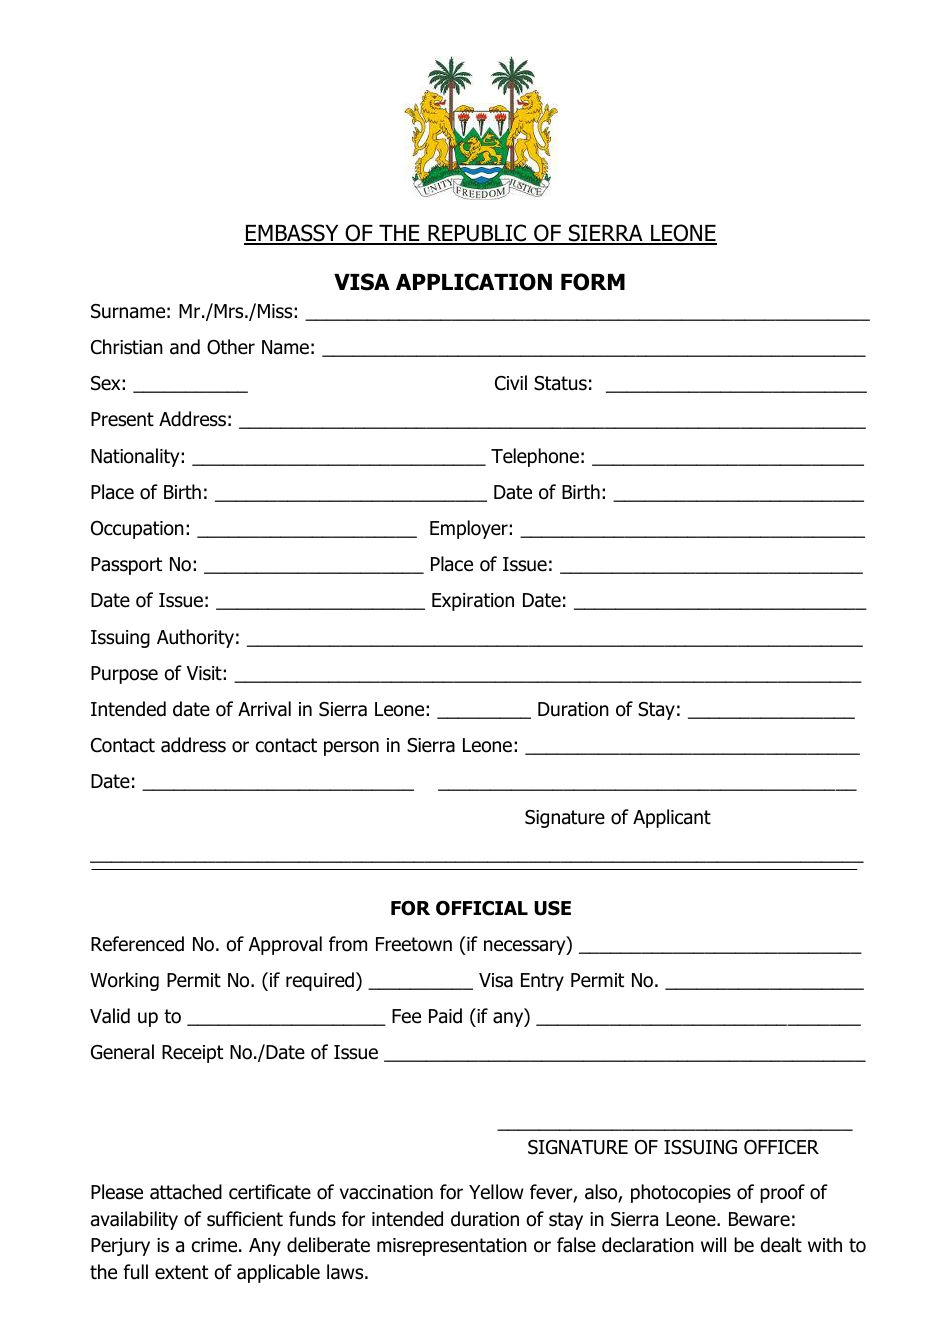 Sierra Leone Visa Application Form - Embassy of the Republic of Sierra Leone - Washington, D.C., Page 1